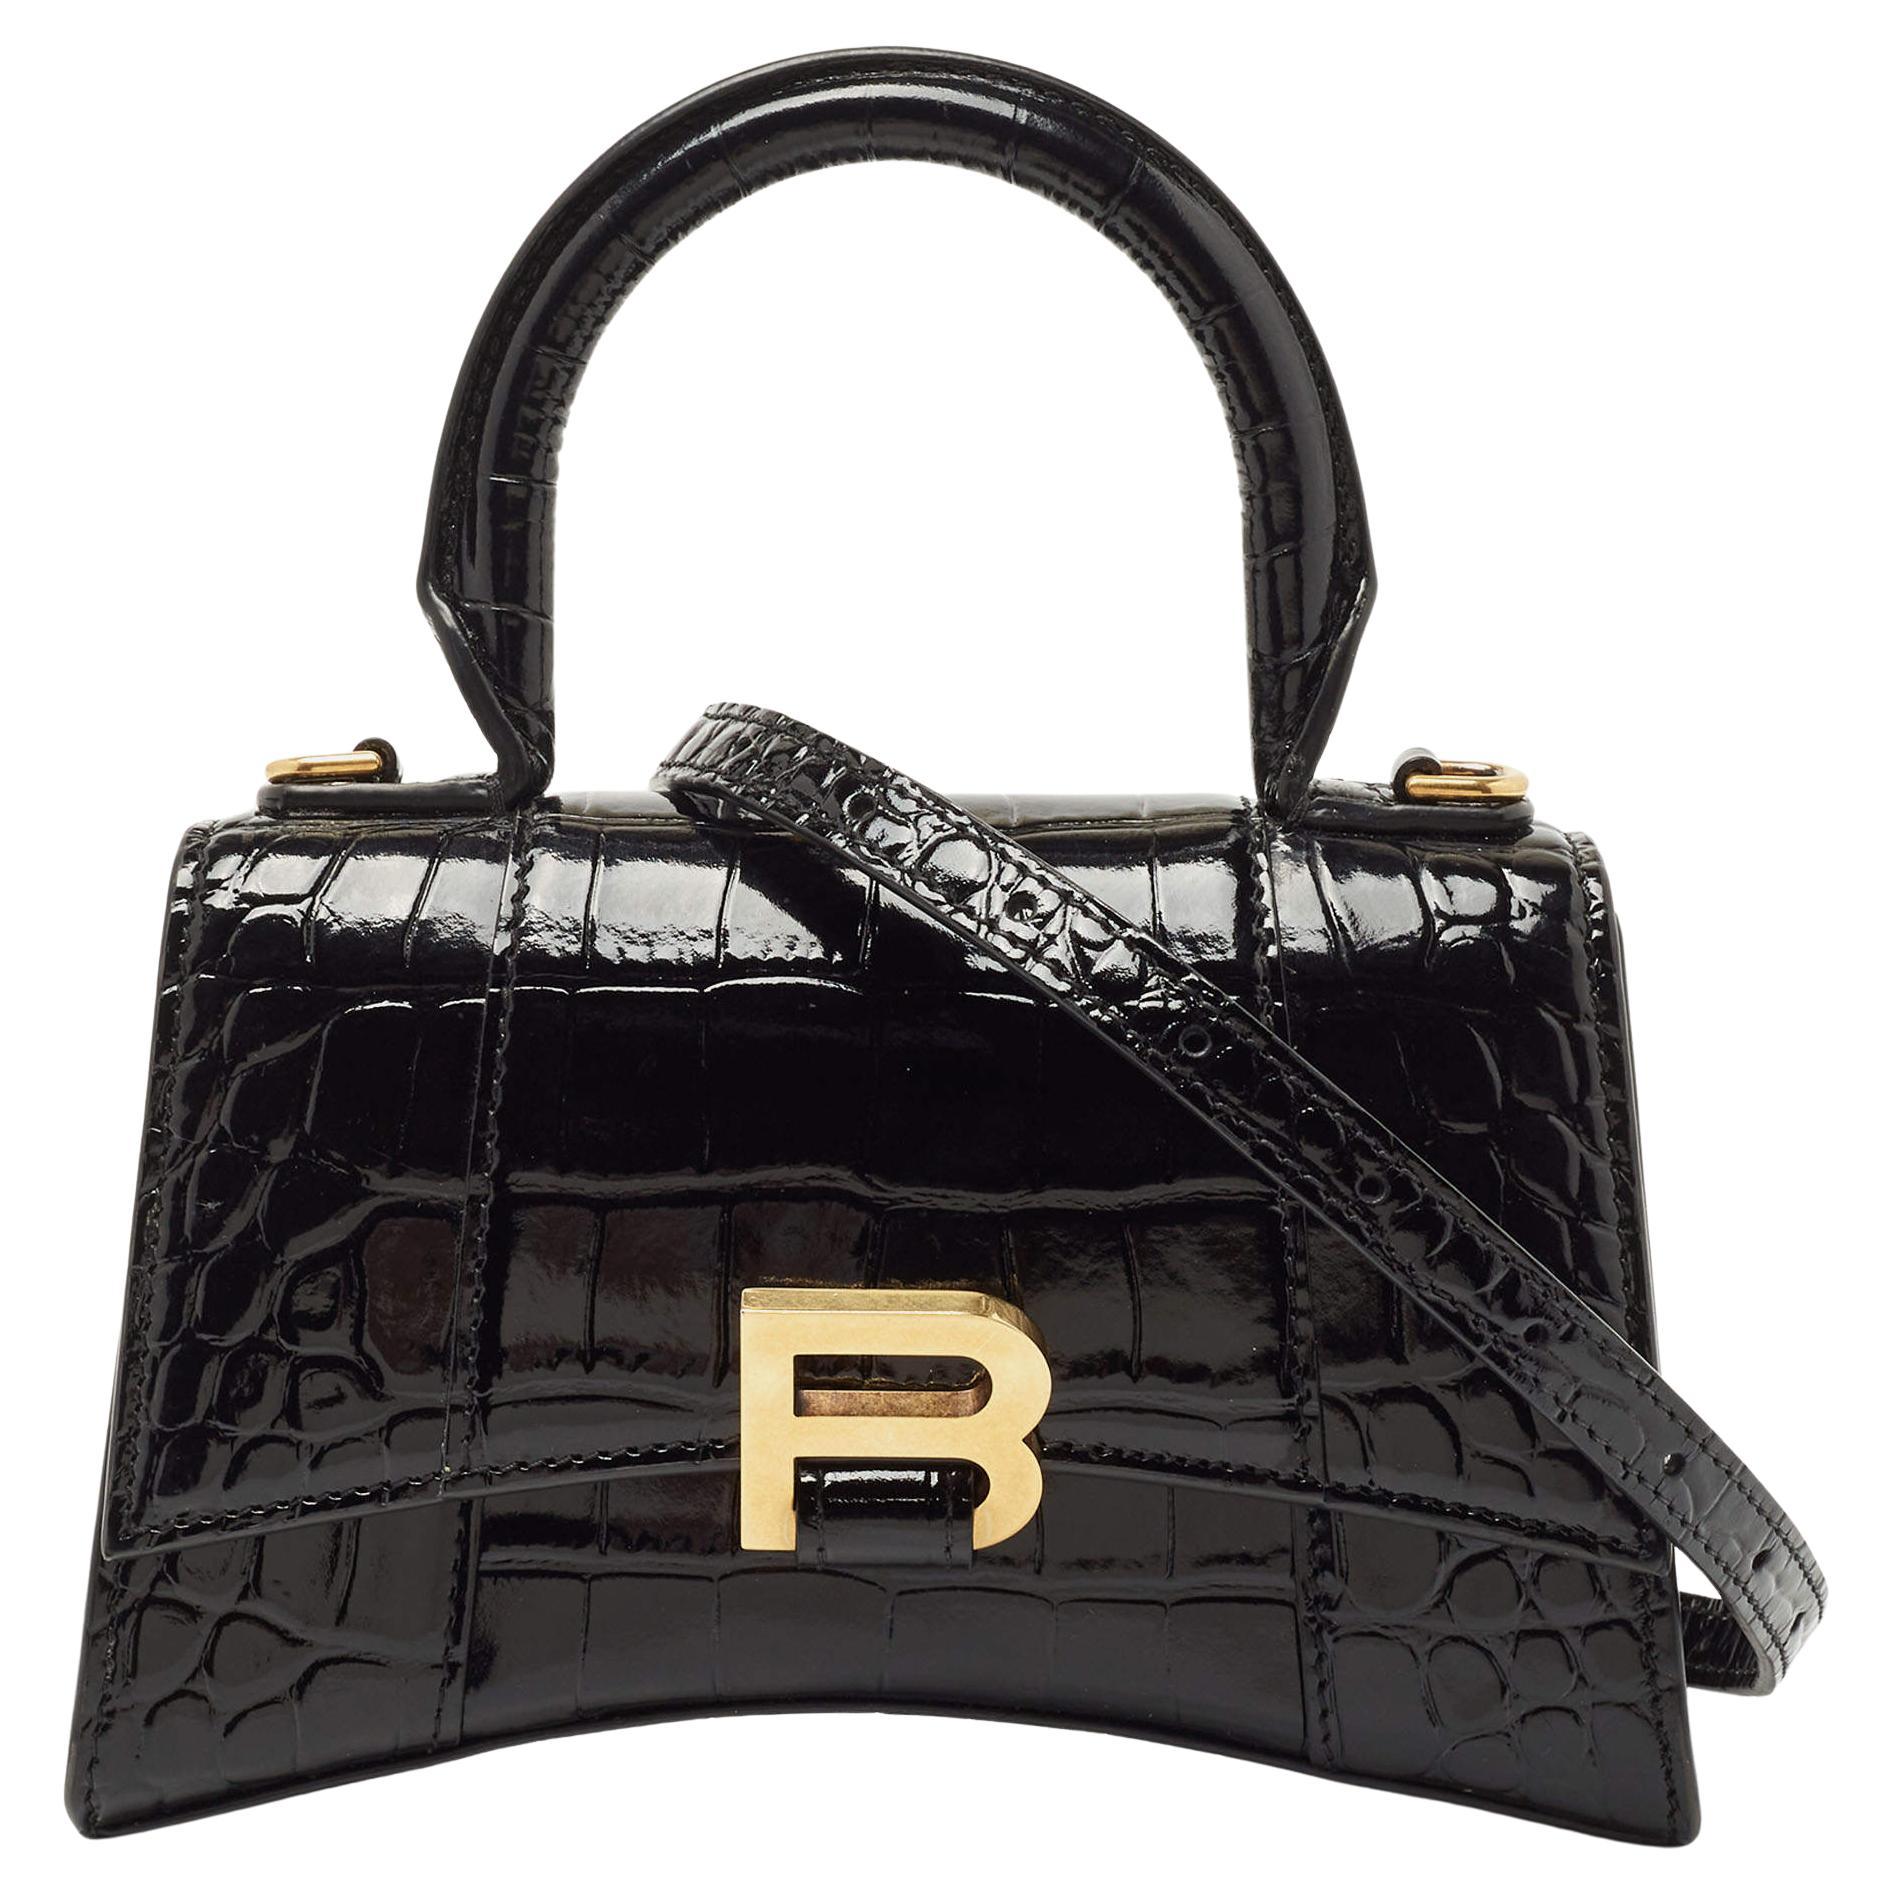 ELSA Crocodile Leather Handbag, Shiny Black, 19 (Limited) 